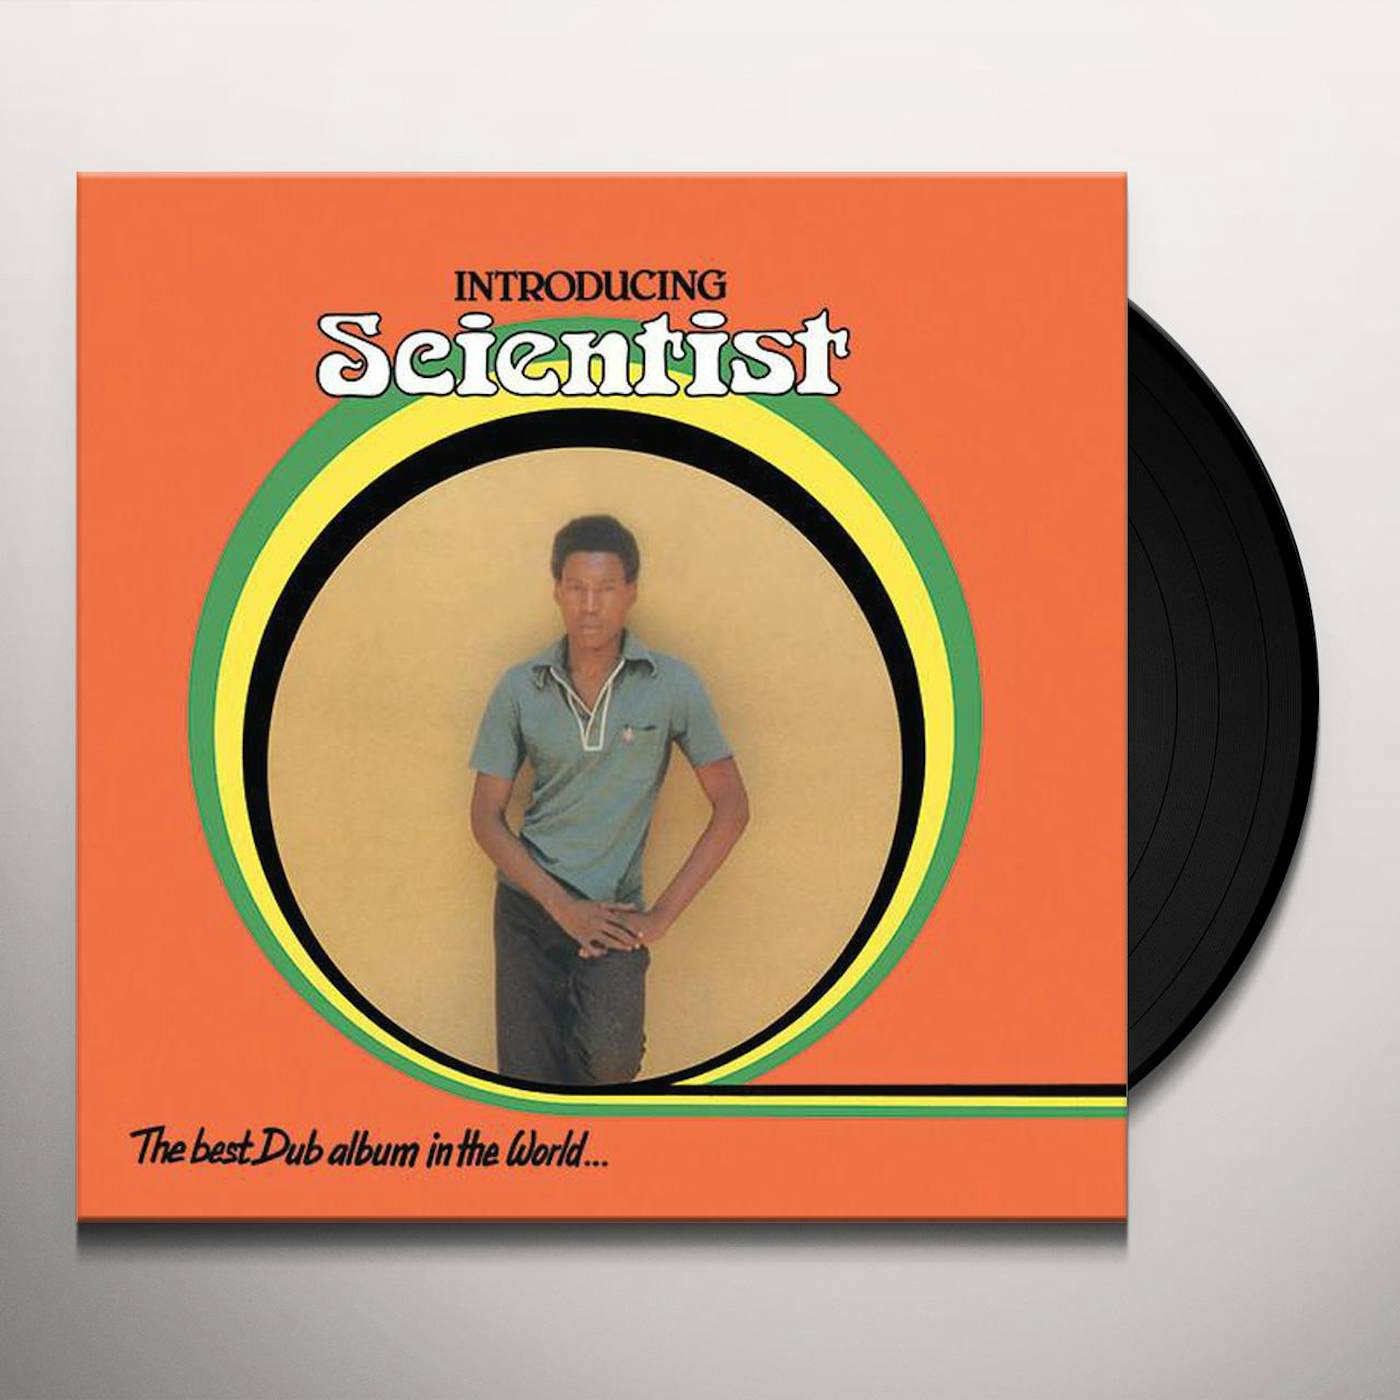 INTRODUCING SCIENTIST - THE BEST DUB ALBUM IN THE WORLD Vinyl Record